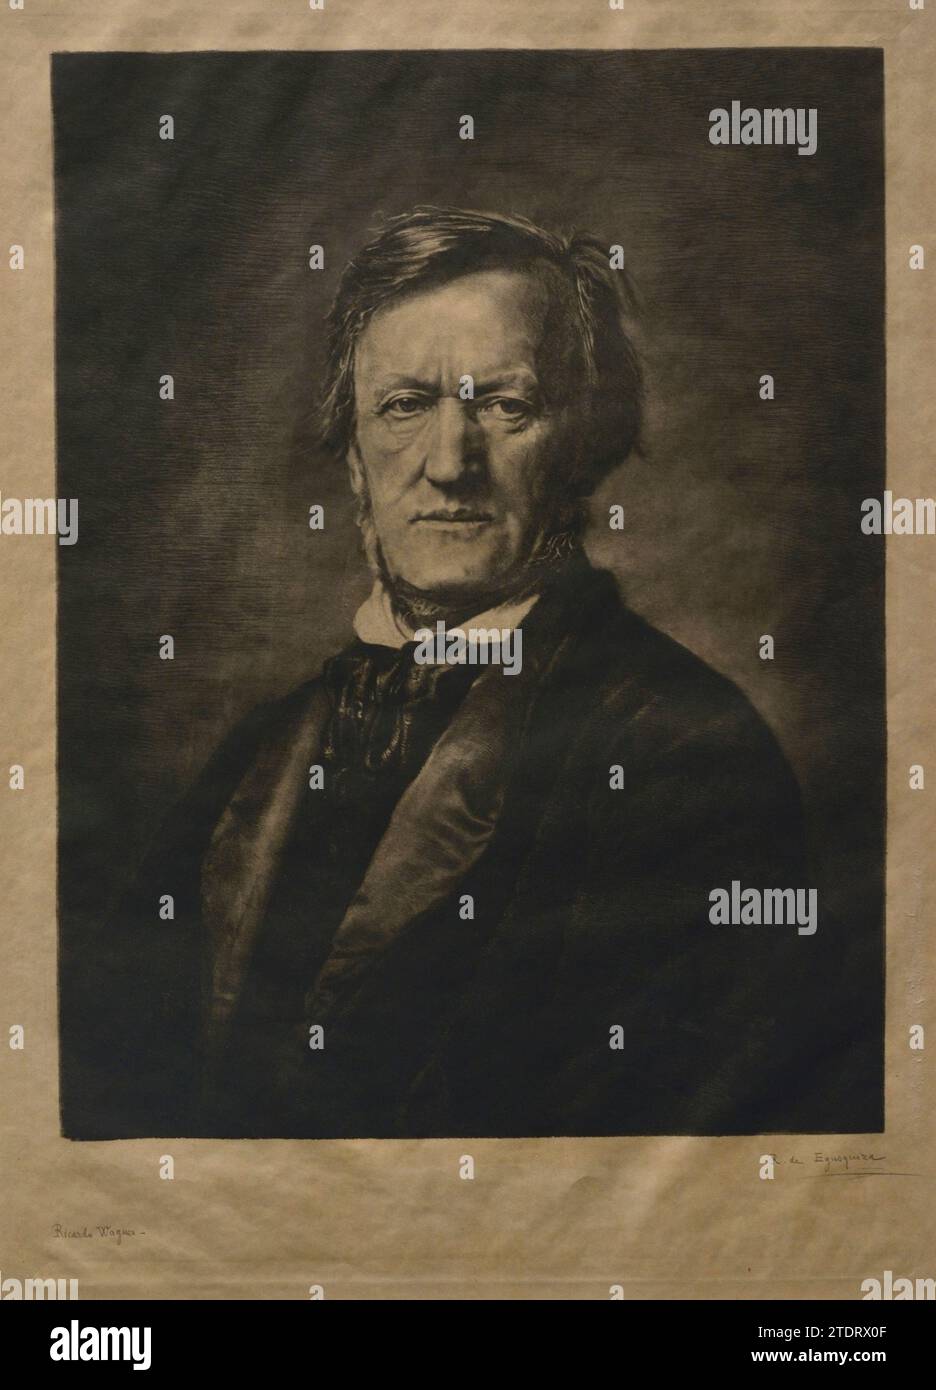 Richard Wagner (1813-1883). German composer. Portrait by Rogelio de Egusquiza (1845-1915), 1882. Etching on paper, 550 x 385 mm. Prado Museum. Madrid. Spain. Stock Photo